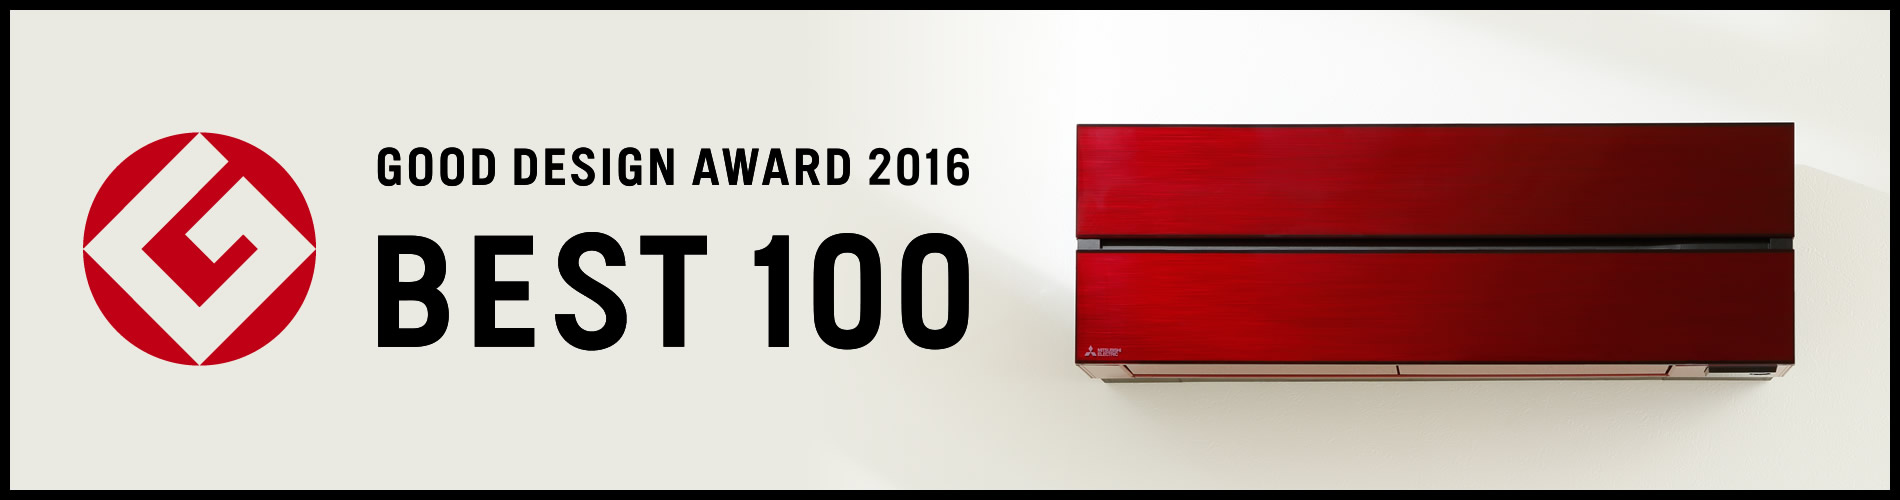 GOOD DESIGN AWARD 2016 BEST 100